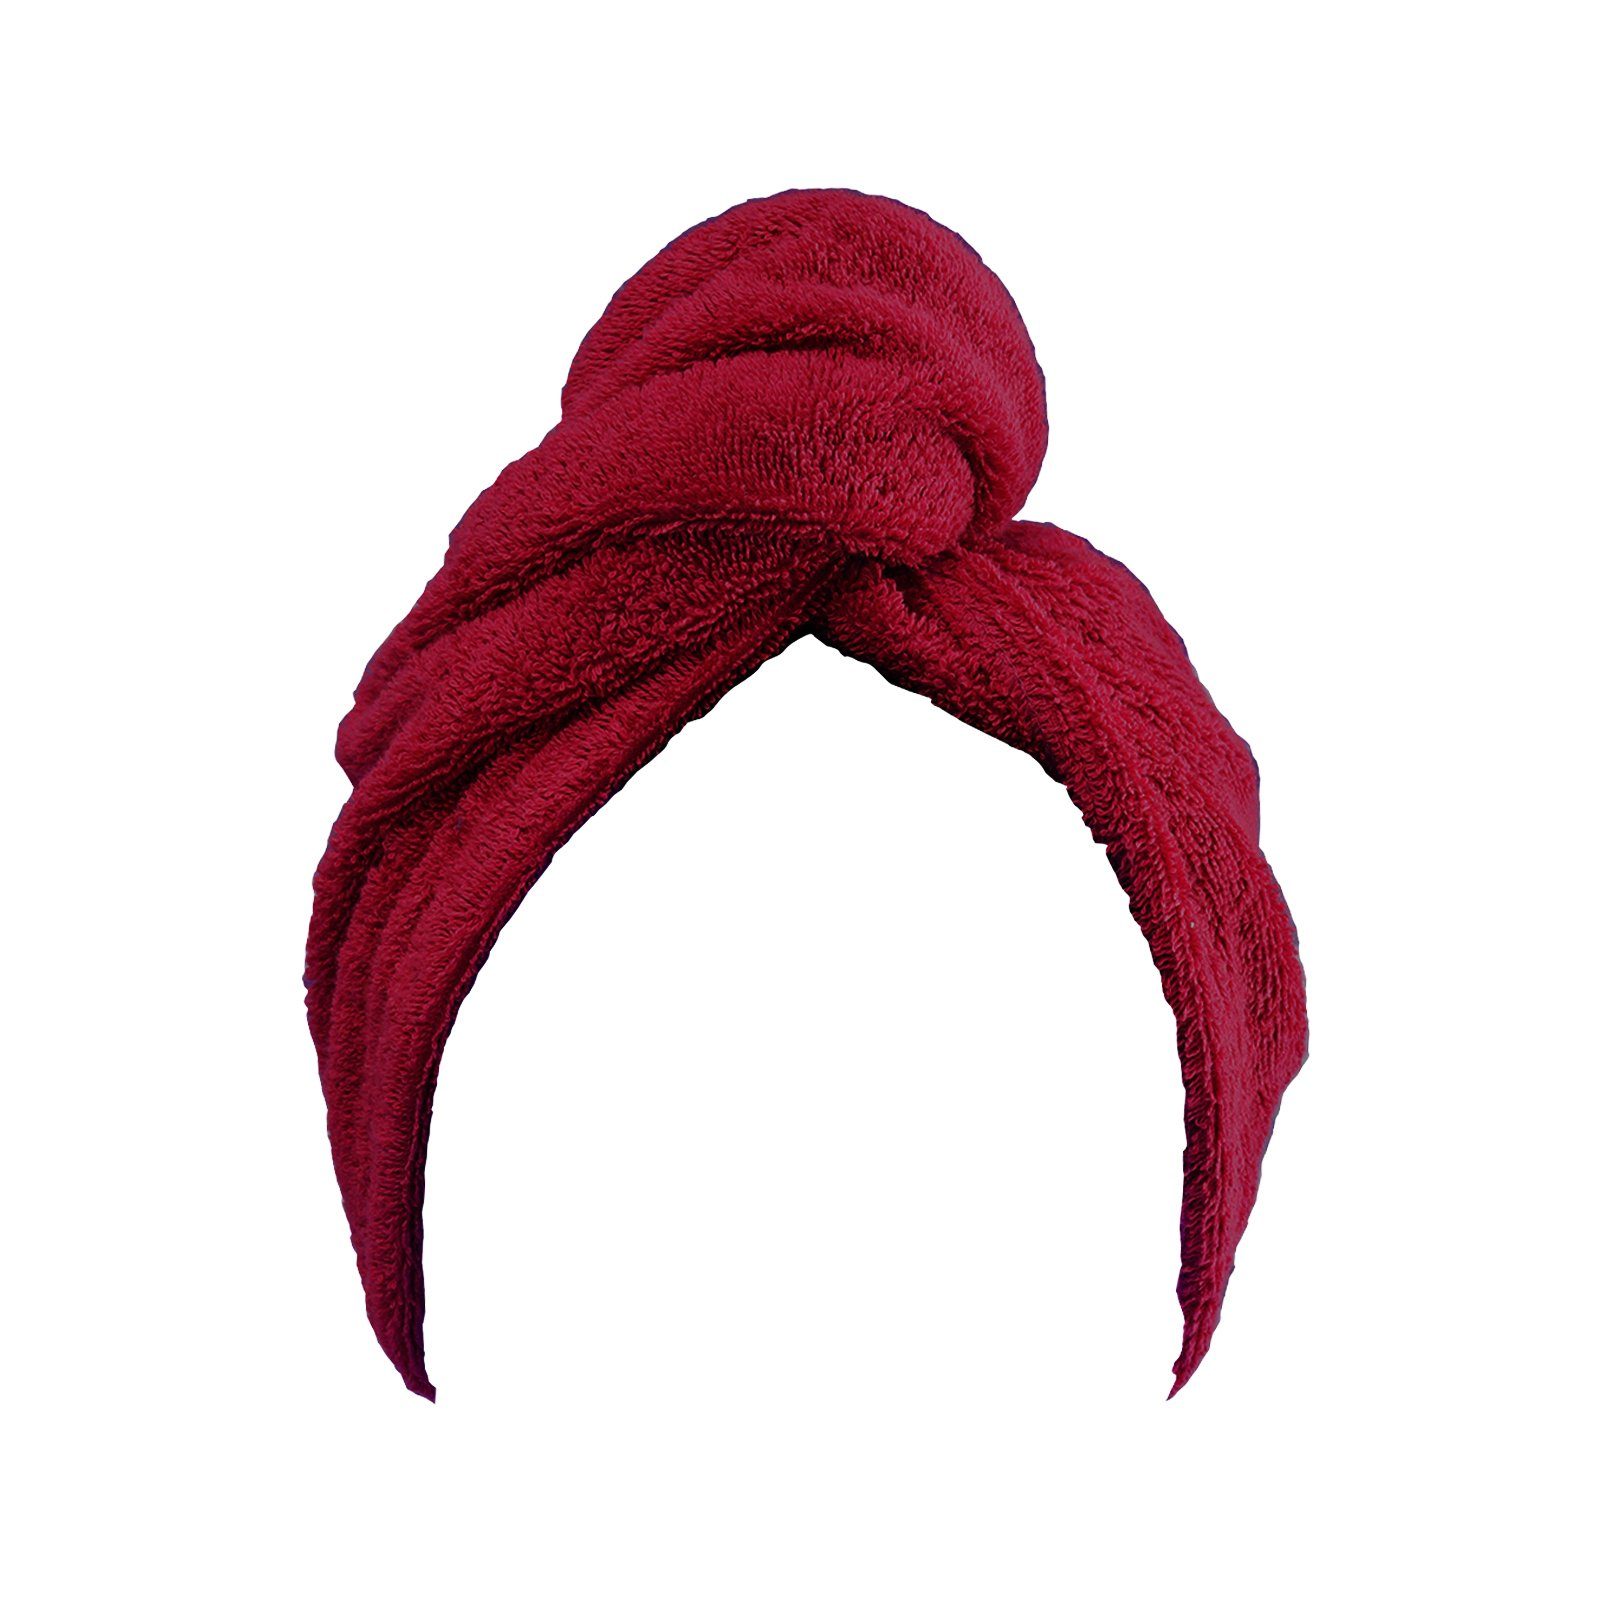 CLASS HOME COLLECTION Turban-Handtuch cm Bordeaux Haar-Turban Kopfhandtuch Baumwolle Frottee 72x27